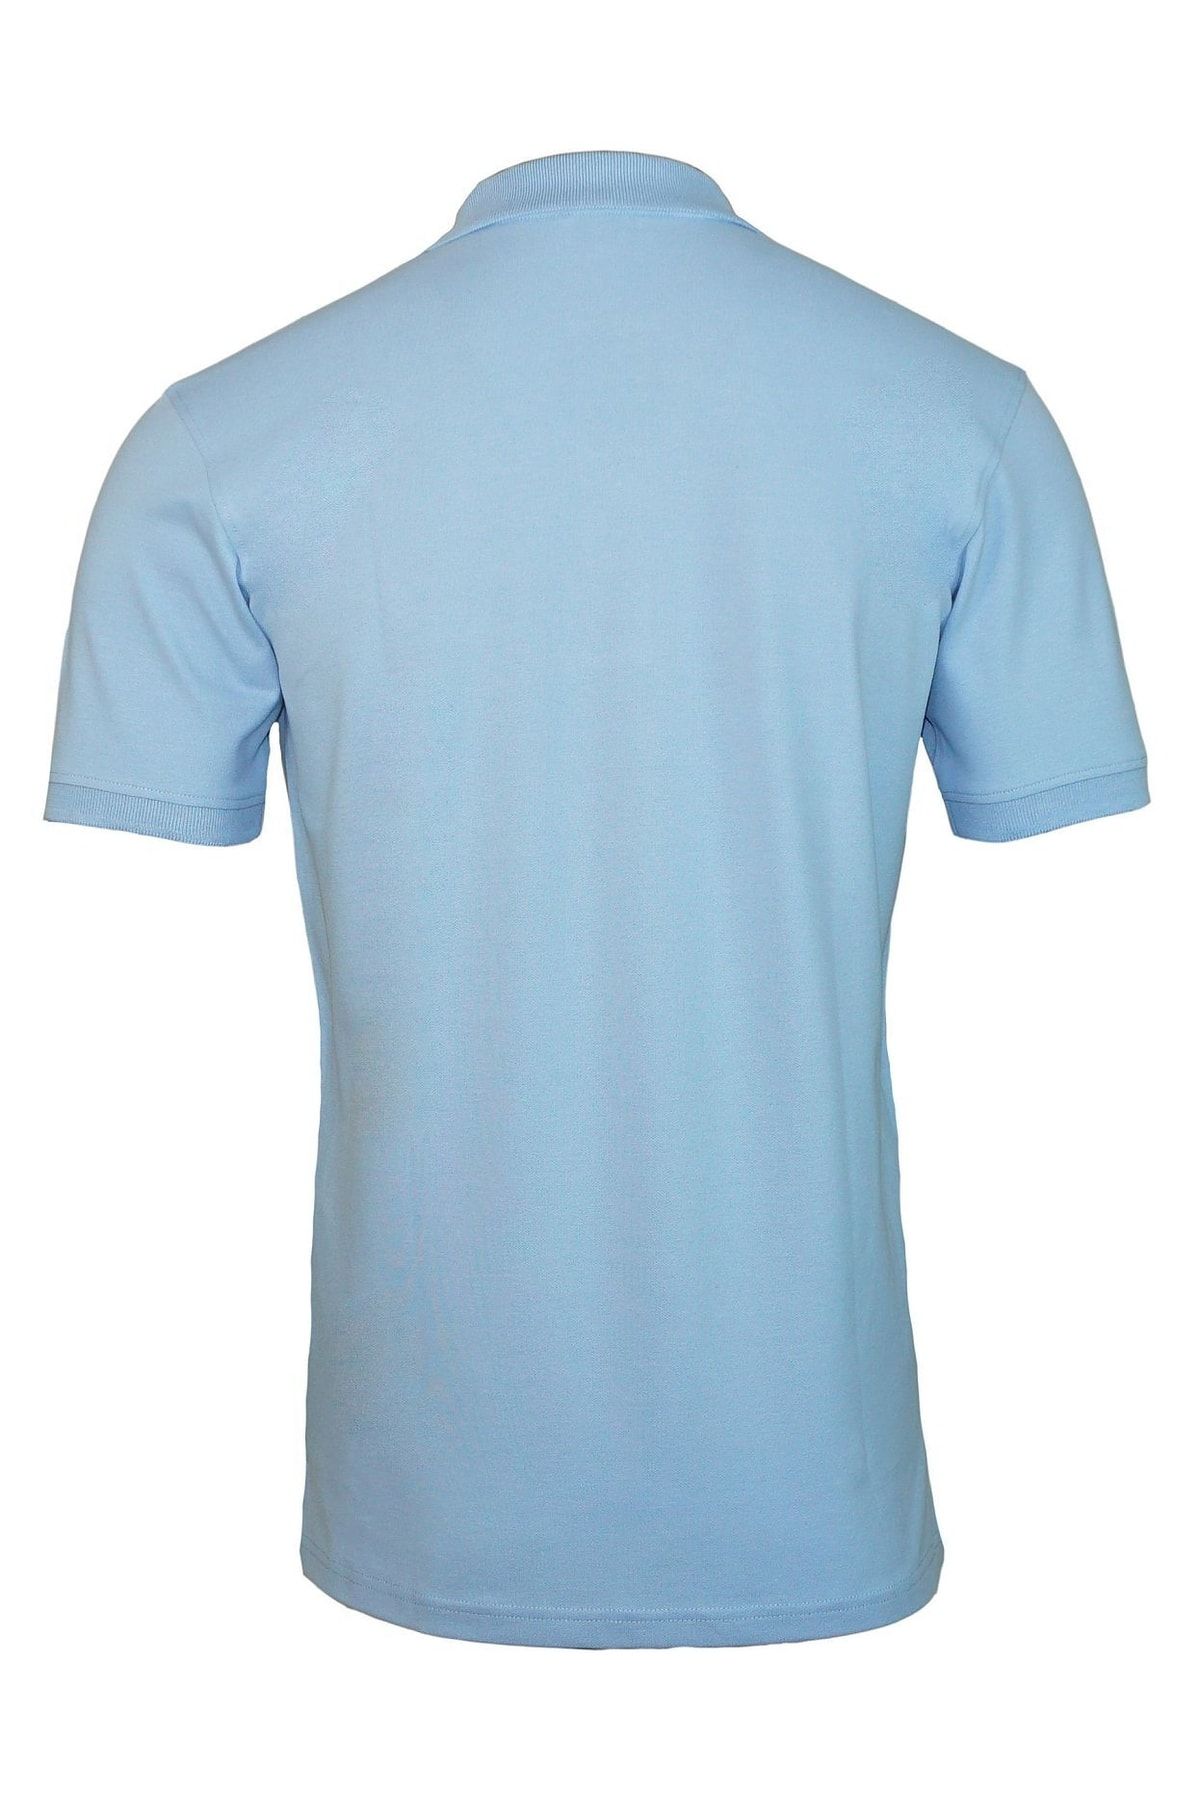 Fit Assn. - U.S. Trendyol - - Blau Regular Poloshirt Polo